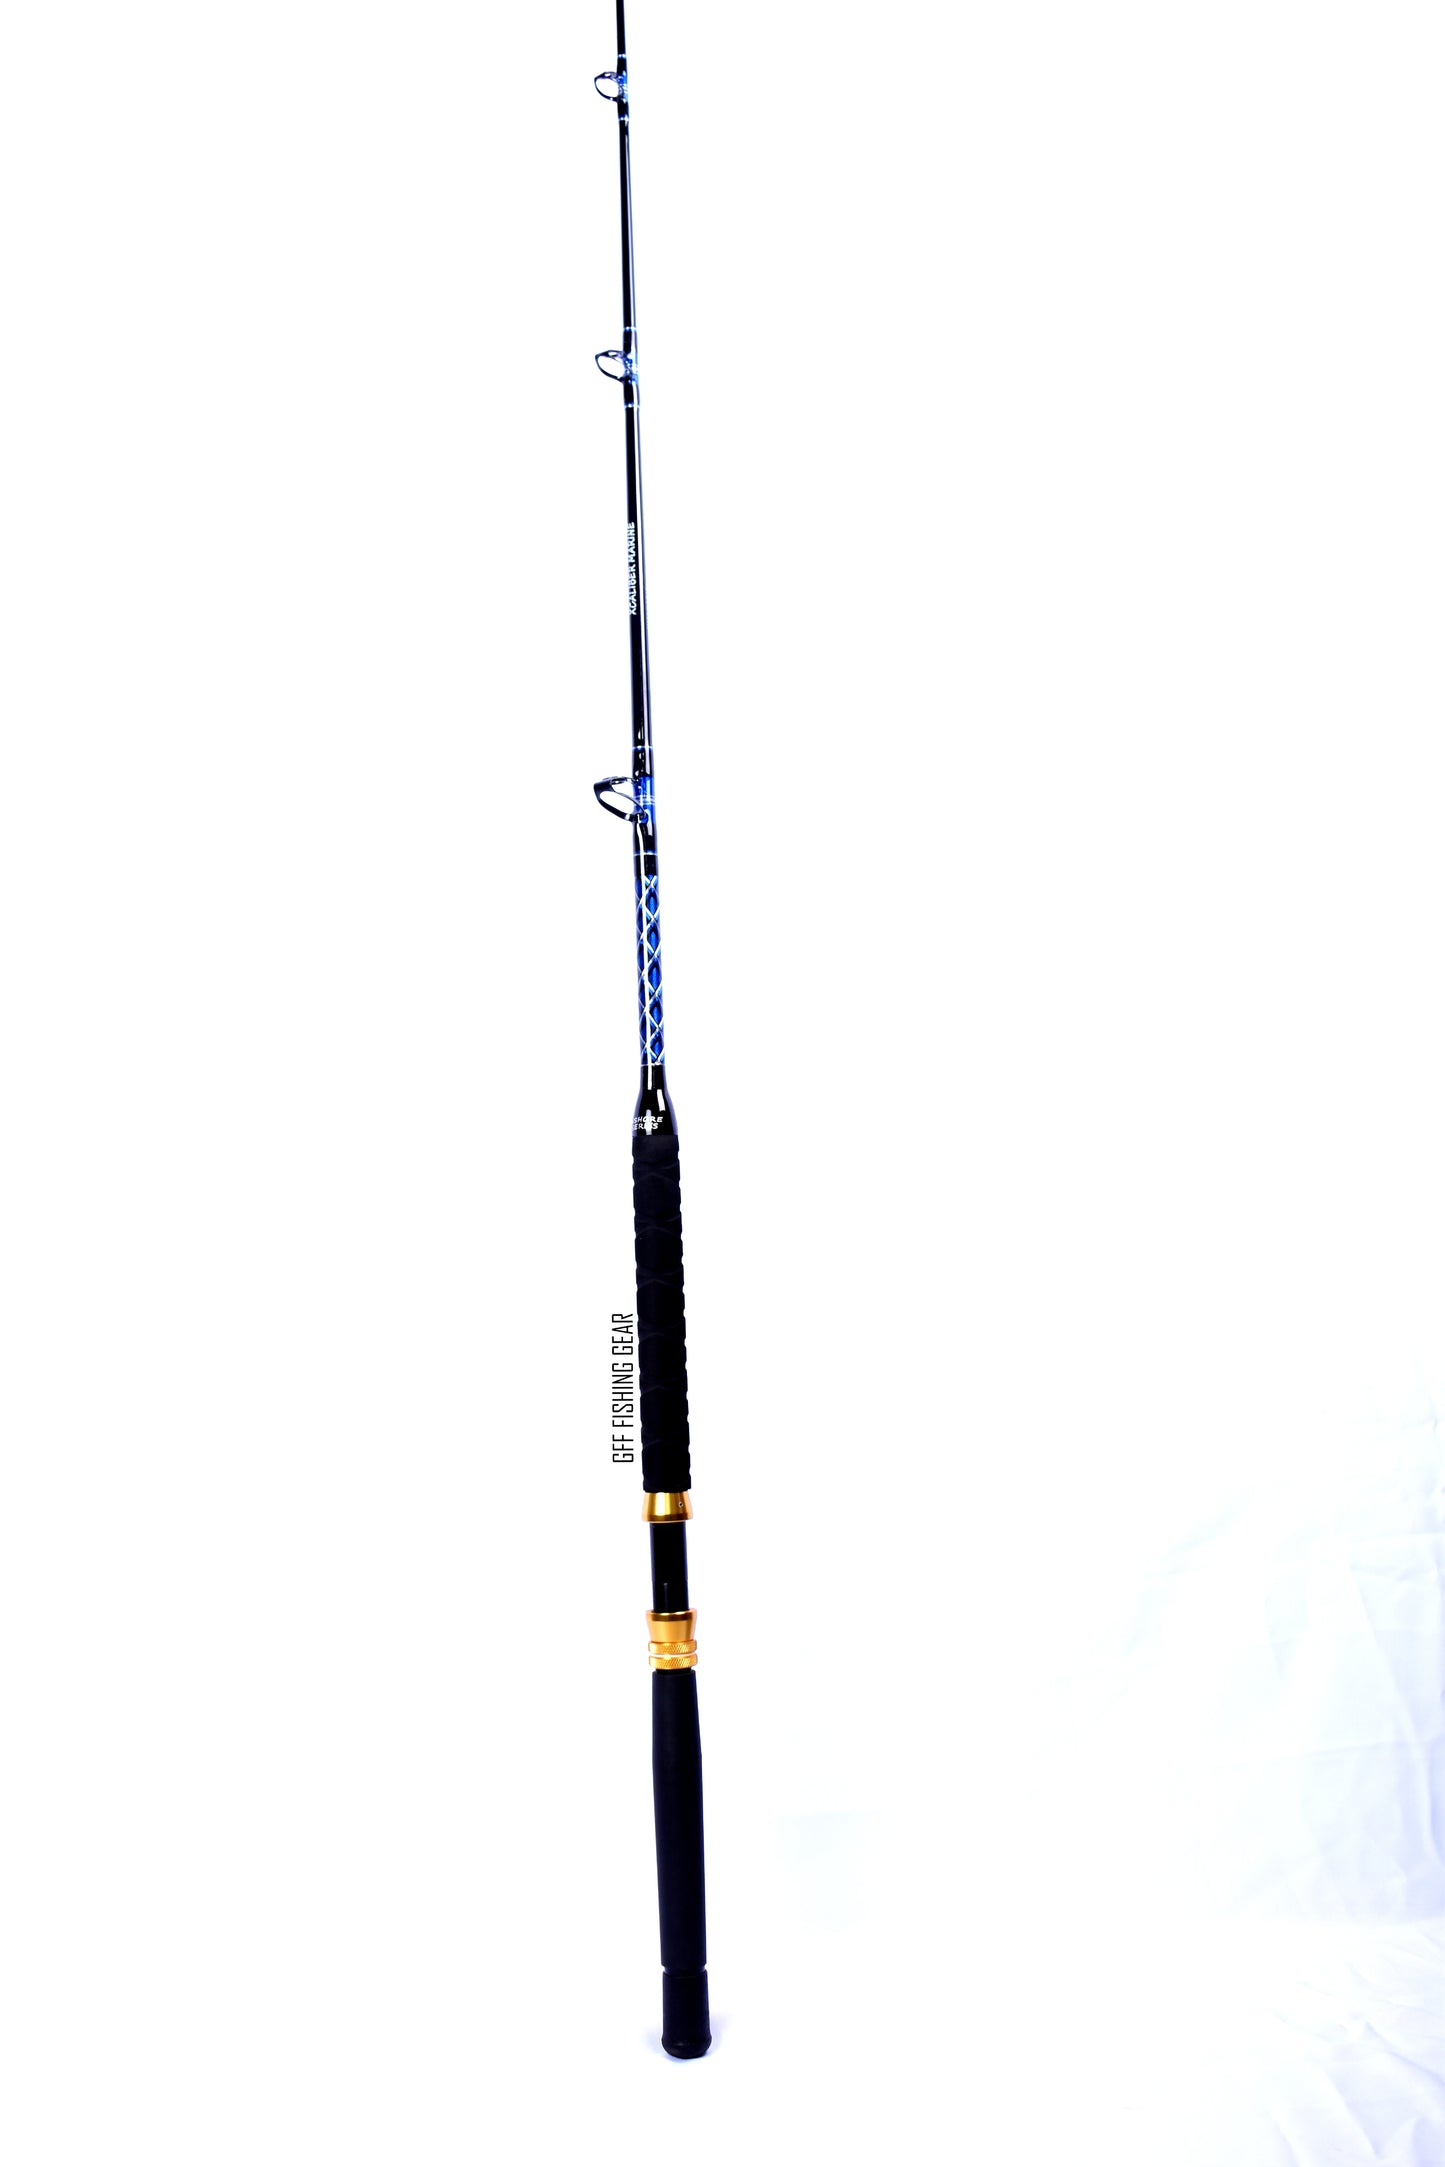 XCaliber Marine XM20401S6 Solid Trolling Fishing Rod